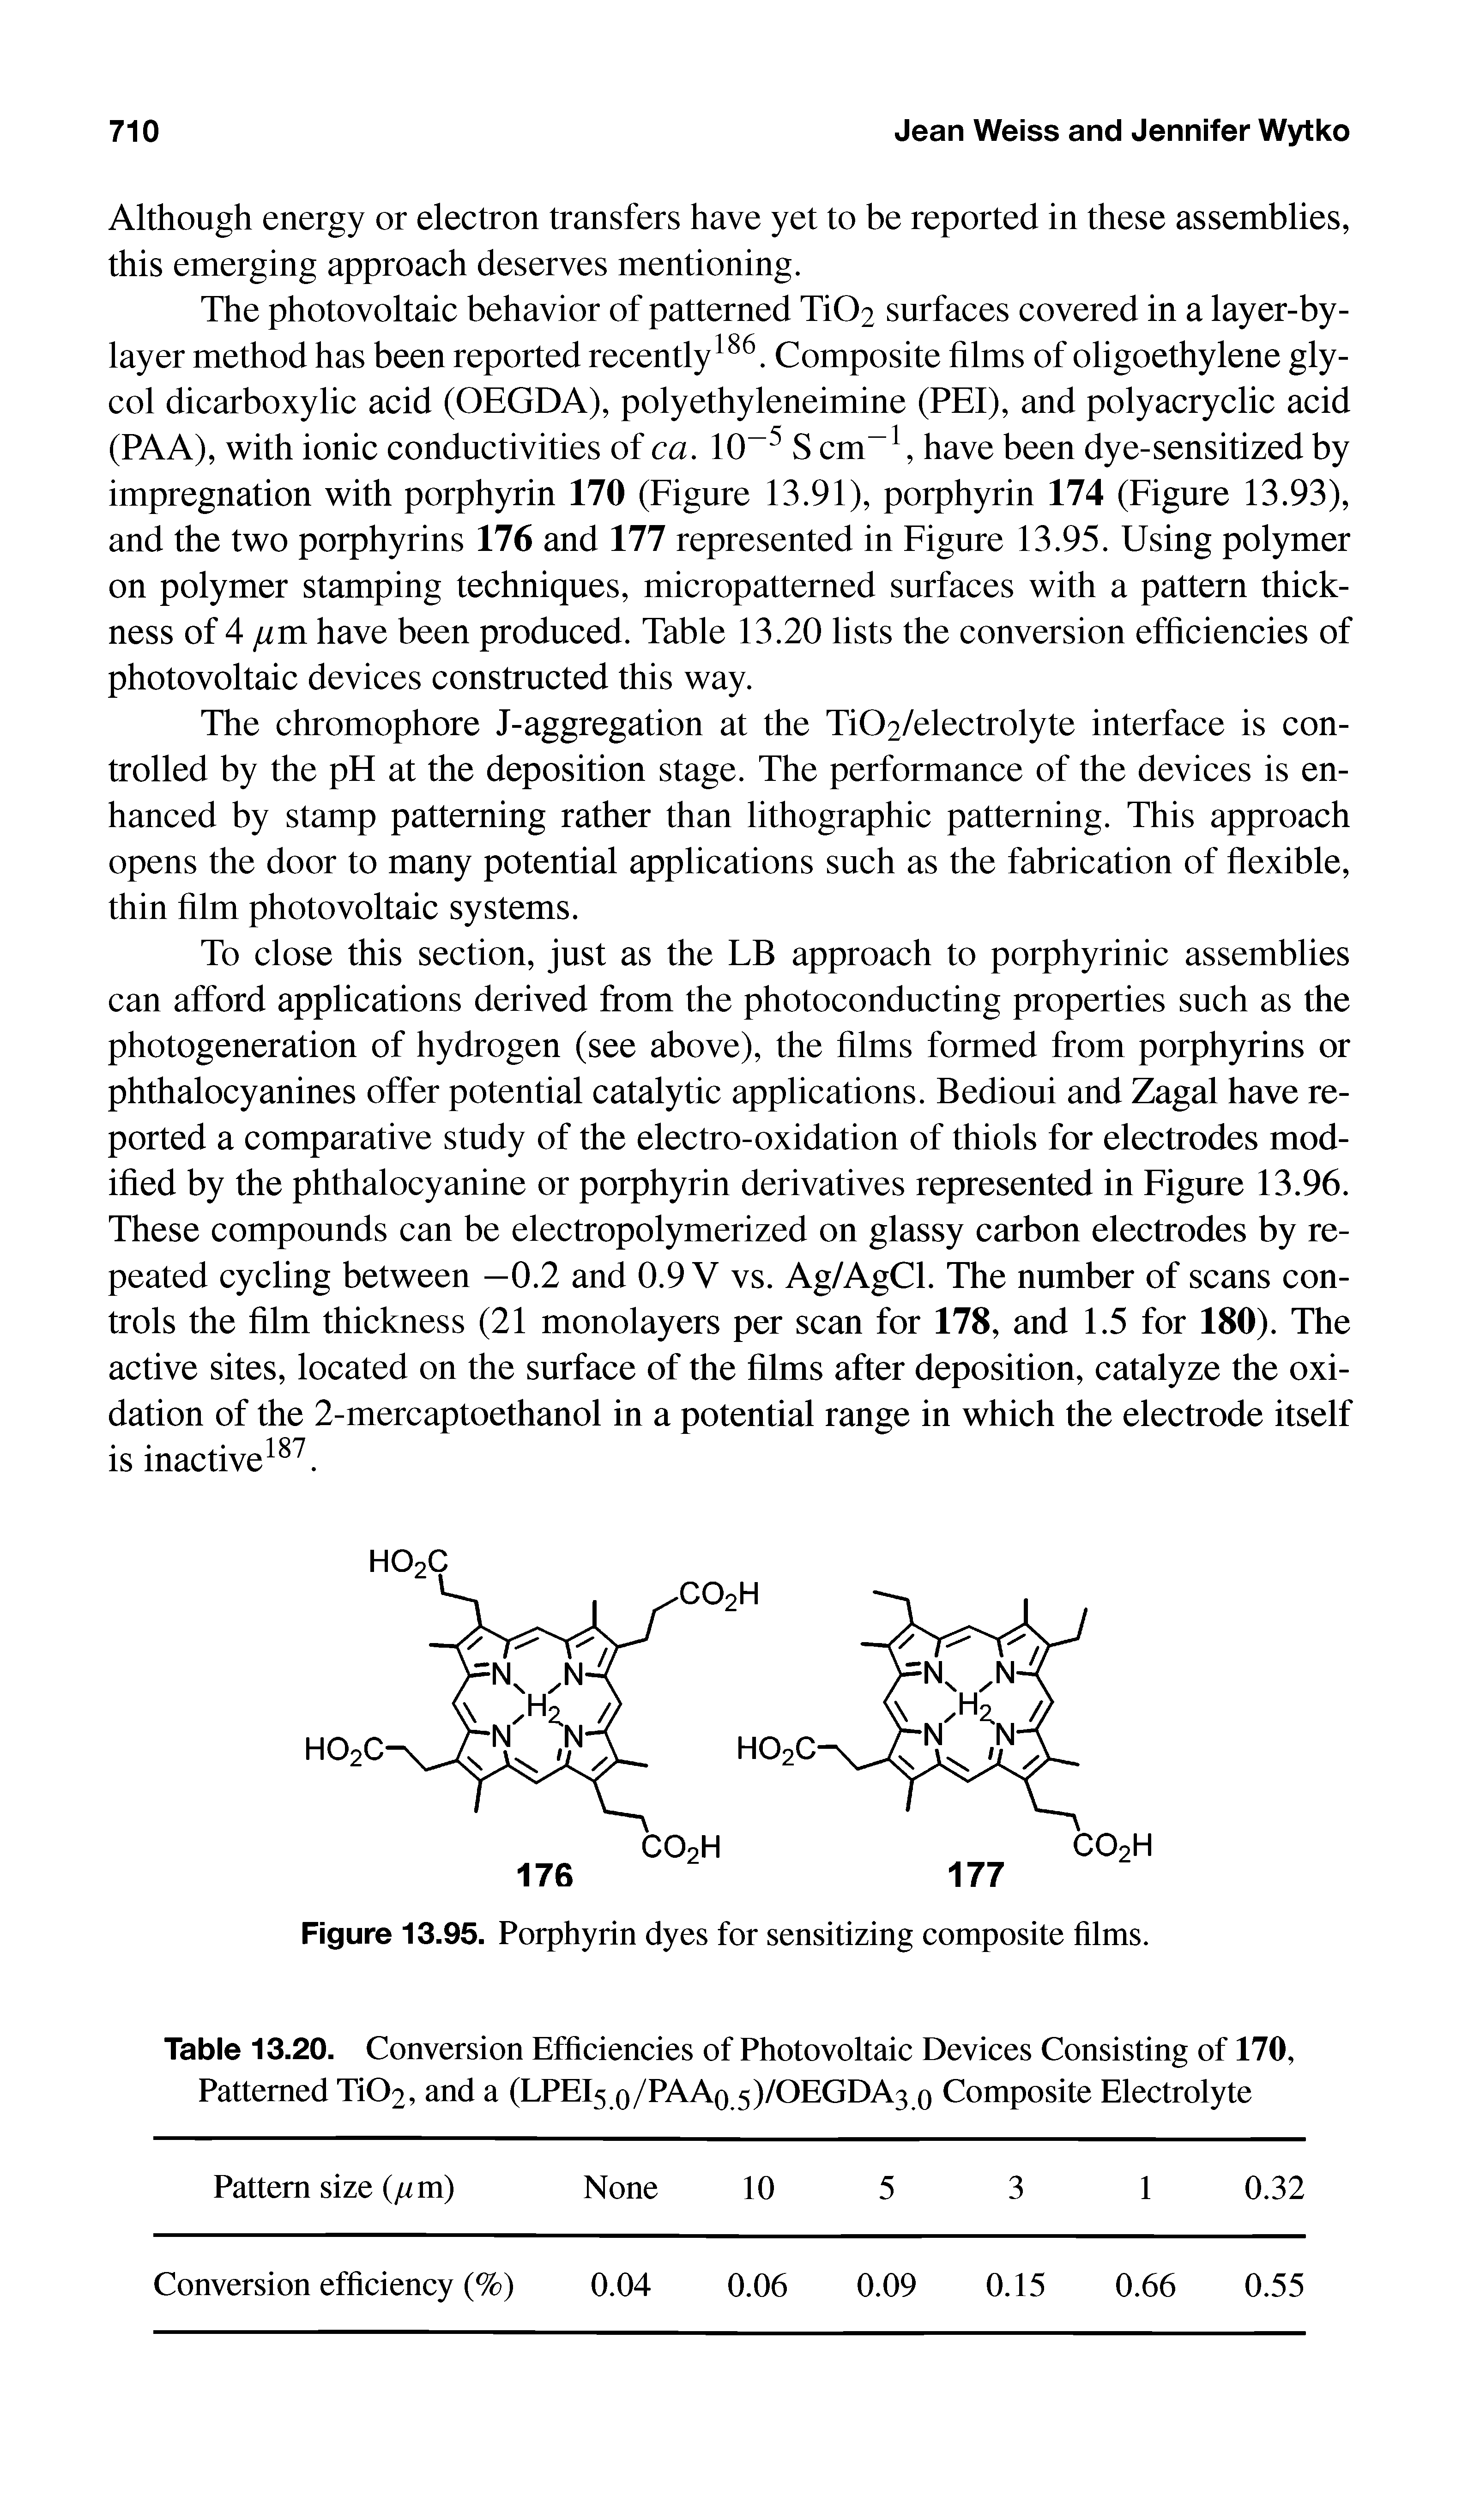 Figure 13.95. Porphyrin dyes for sensitizing composite films.